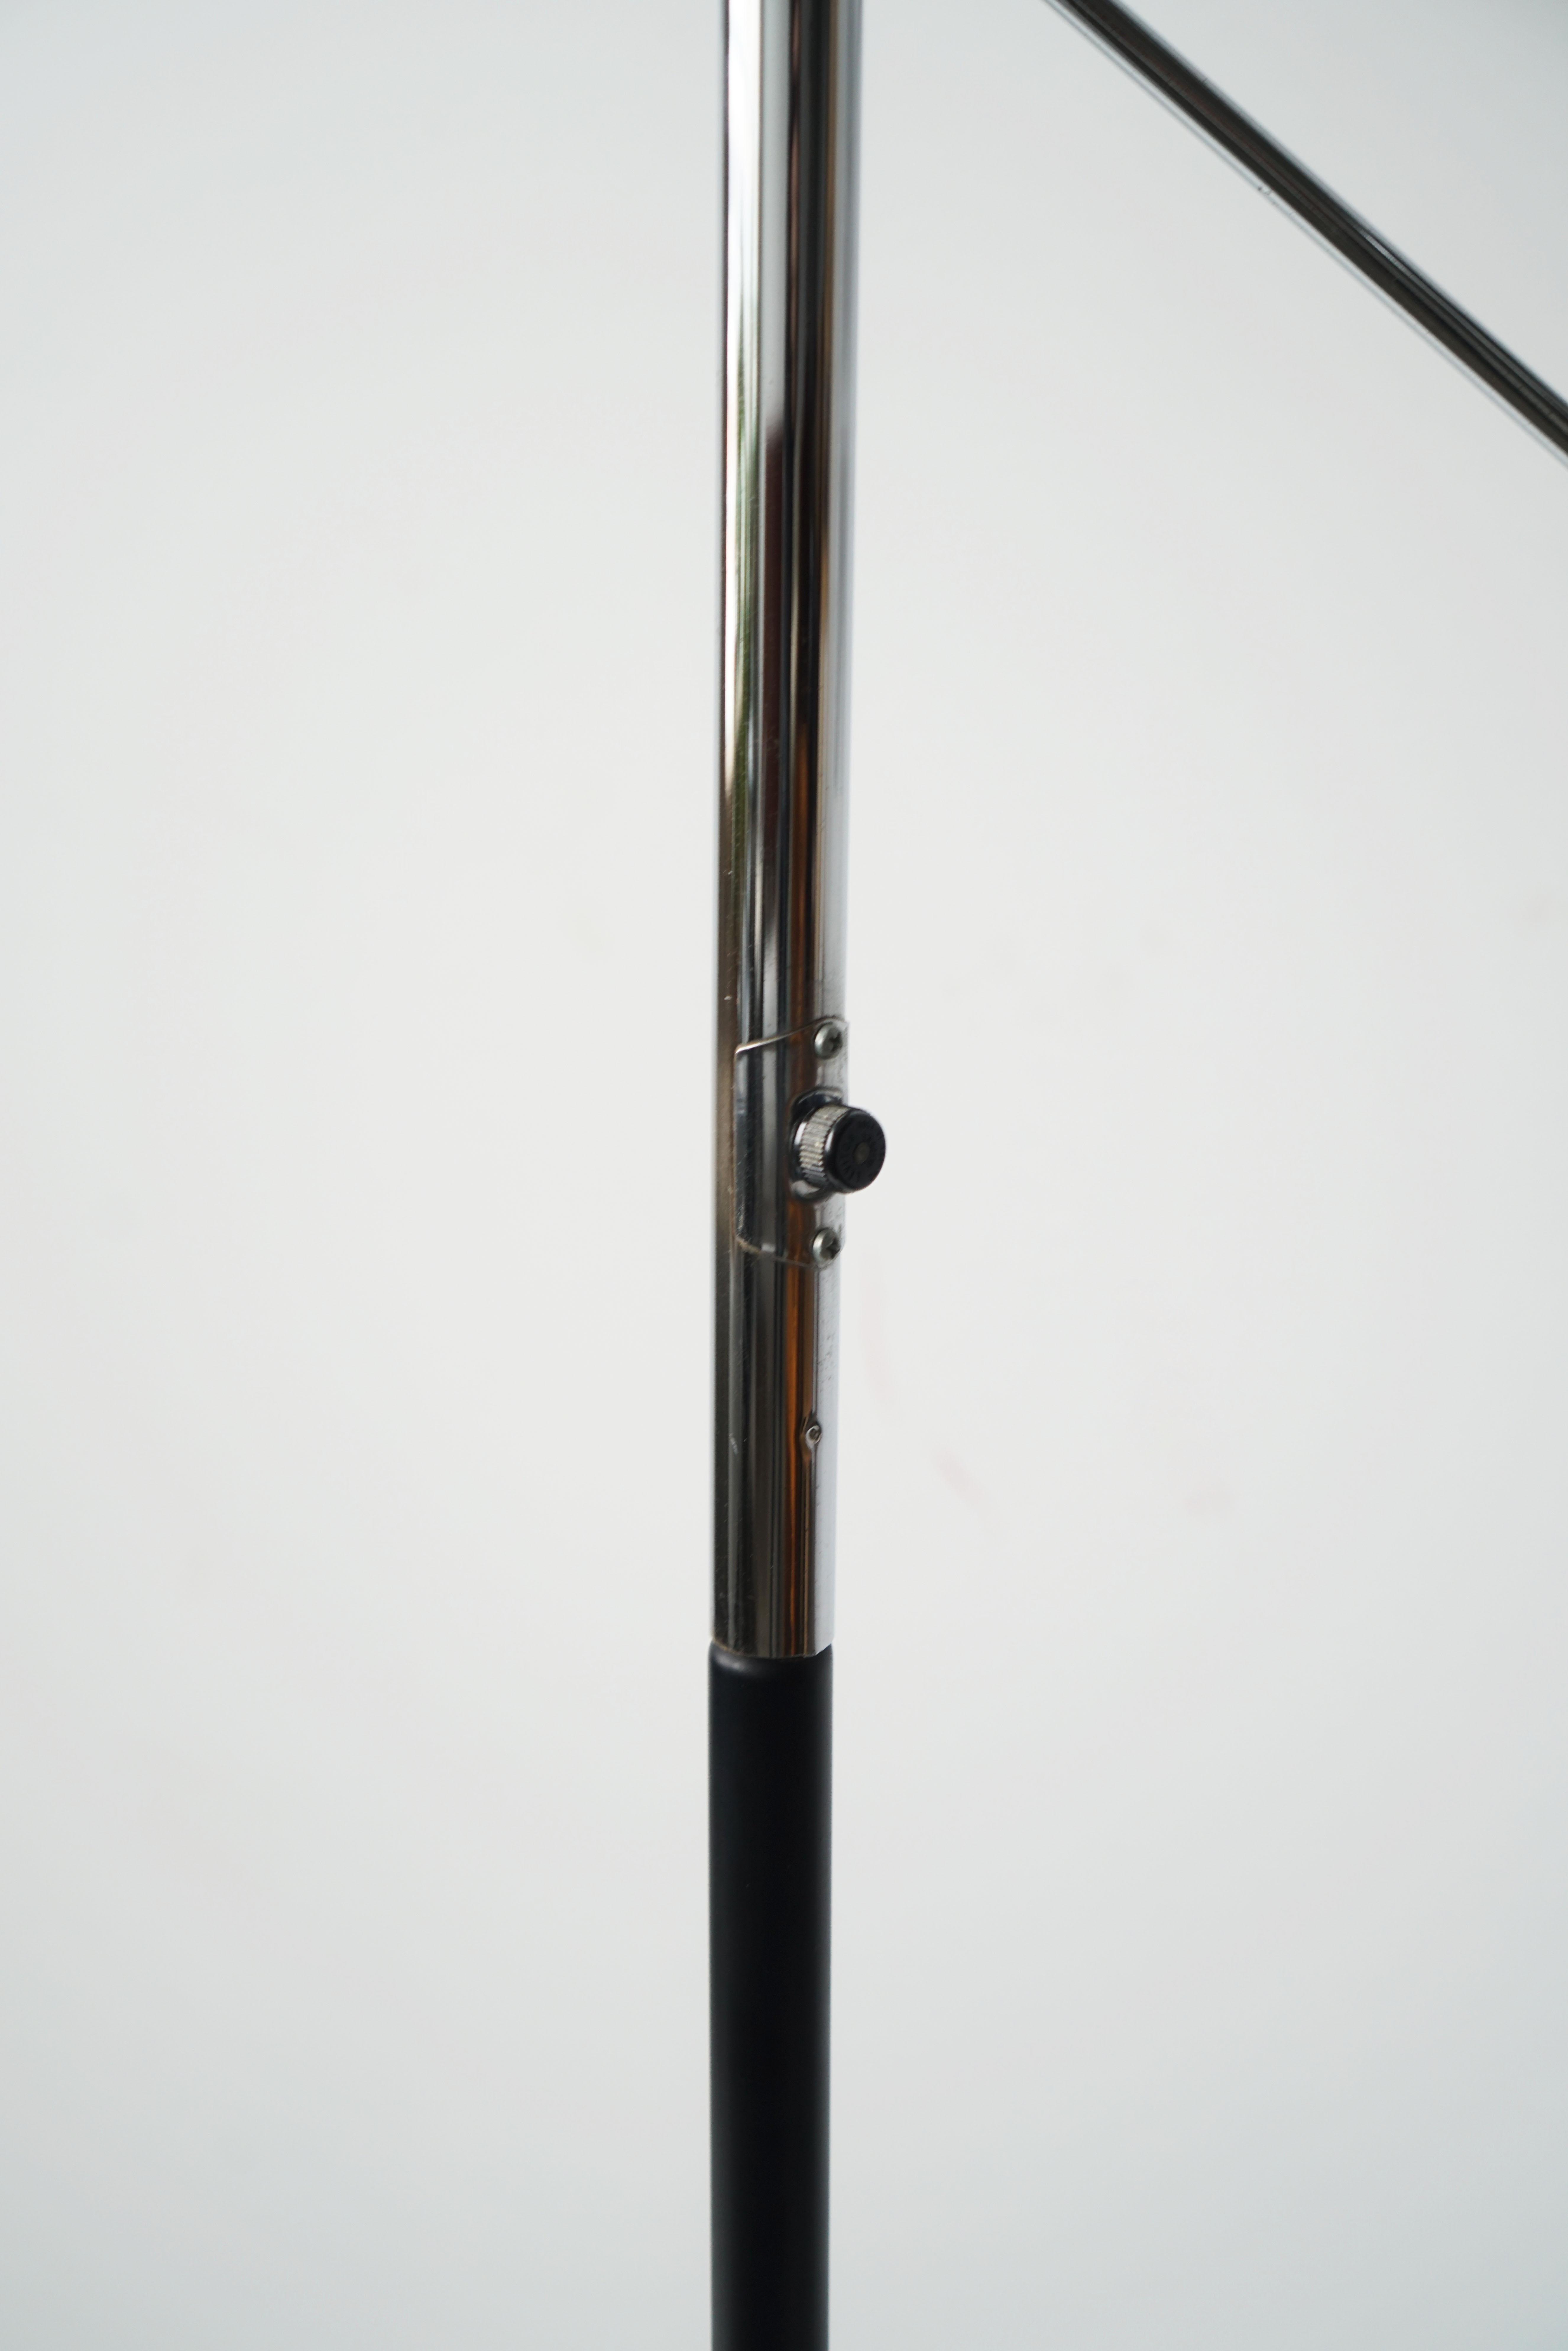 Fin du 20e siècle Robert Sonneman Triennale Orbiter Eyeball lampadaire réglable à 3 bras en vente